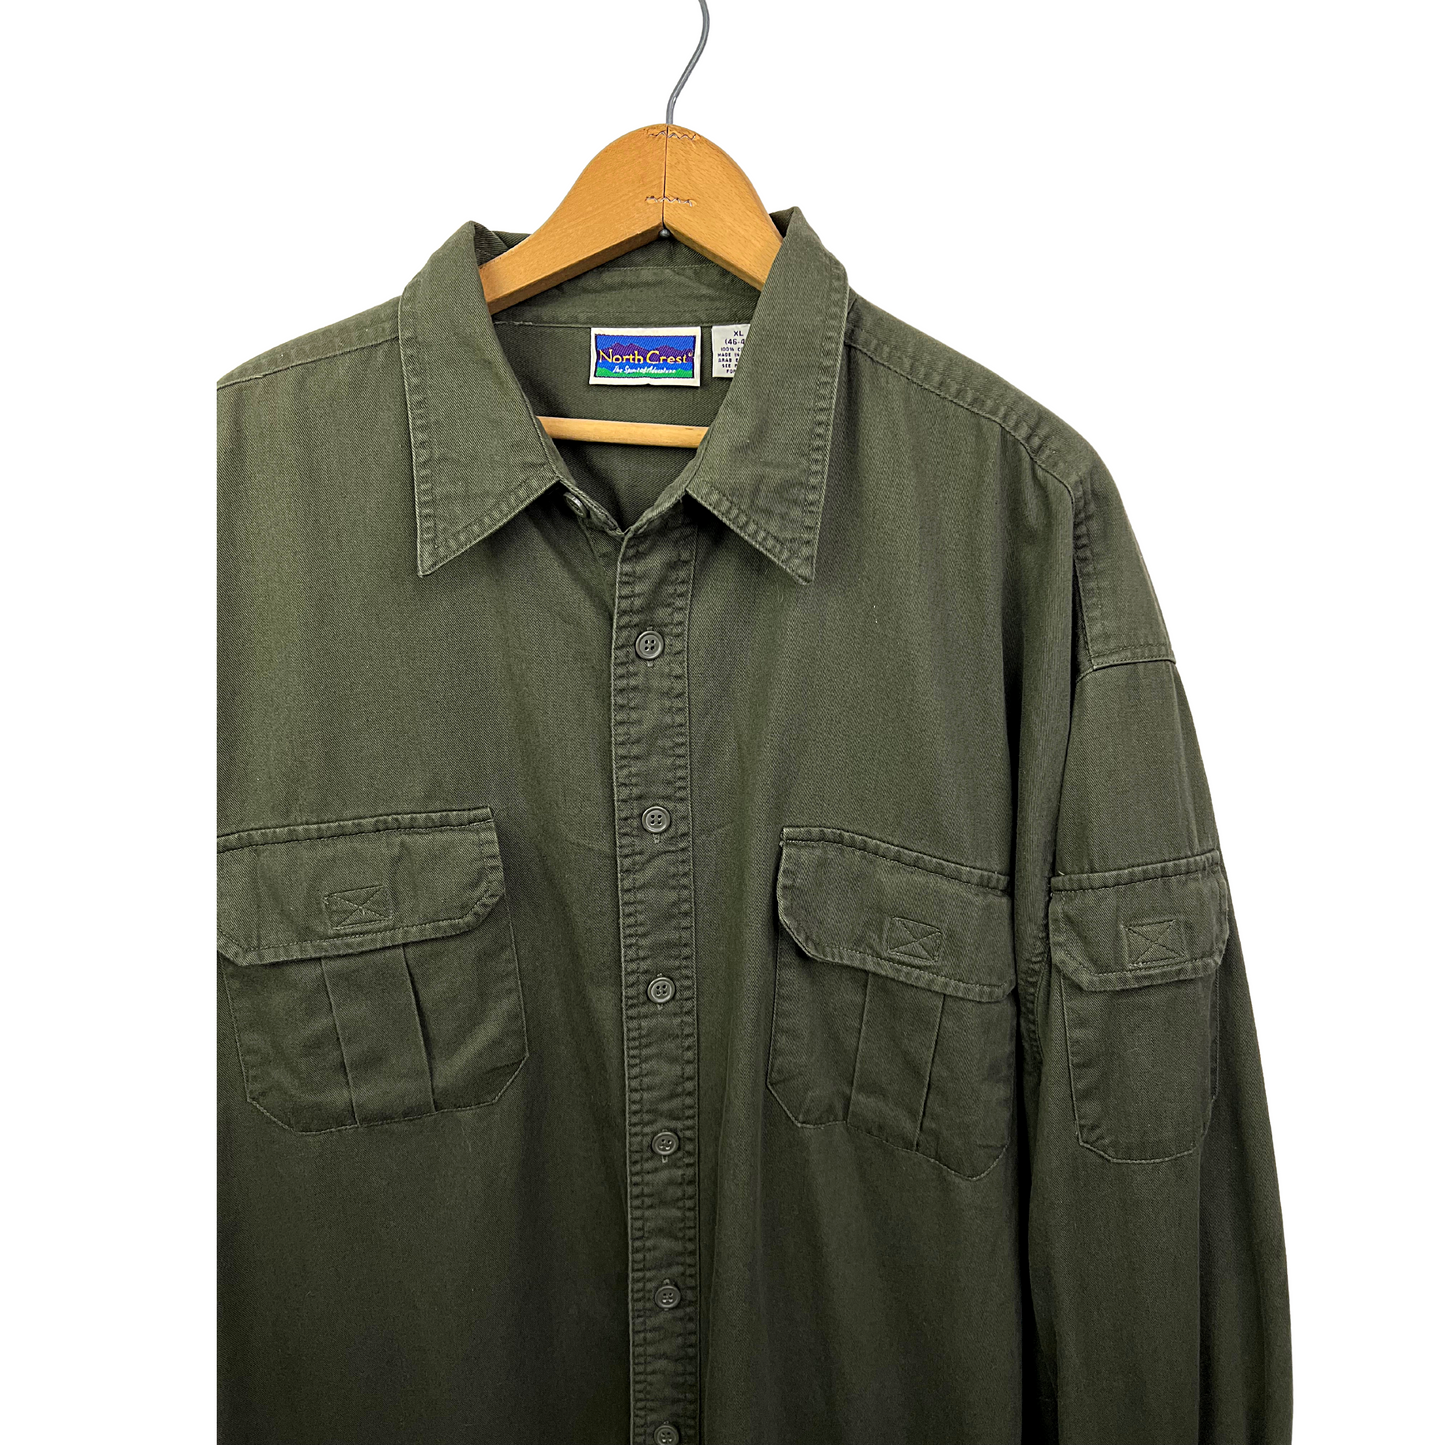 90’s Army Green Cargo Buttondown Shirt Size XL